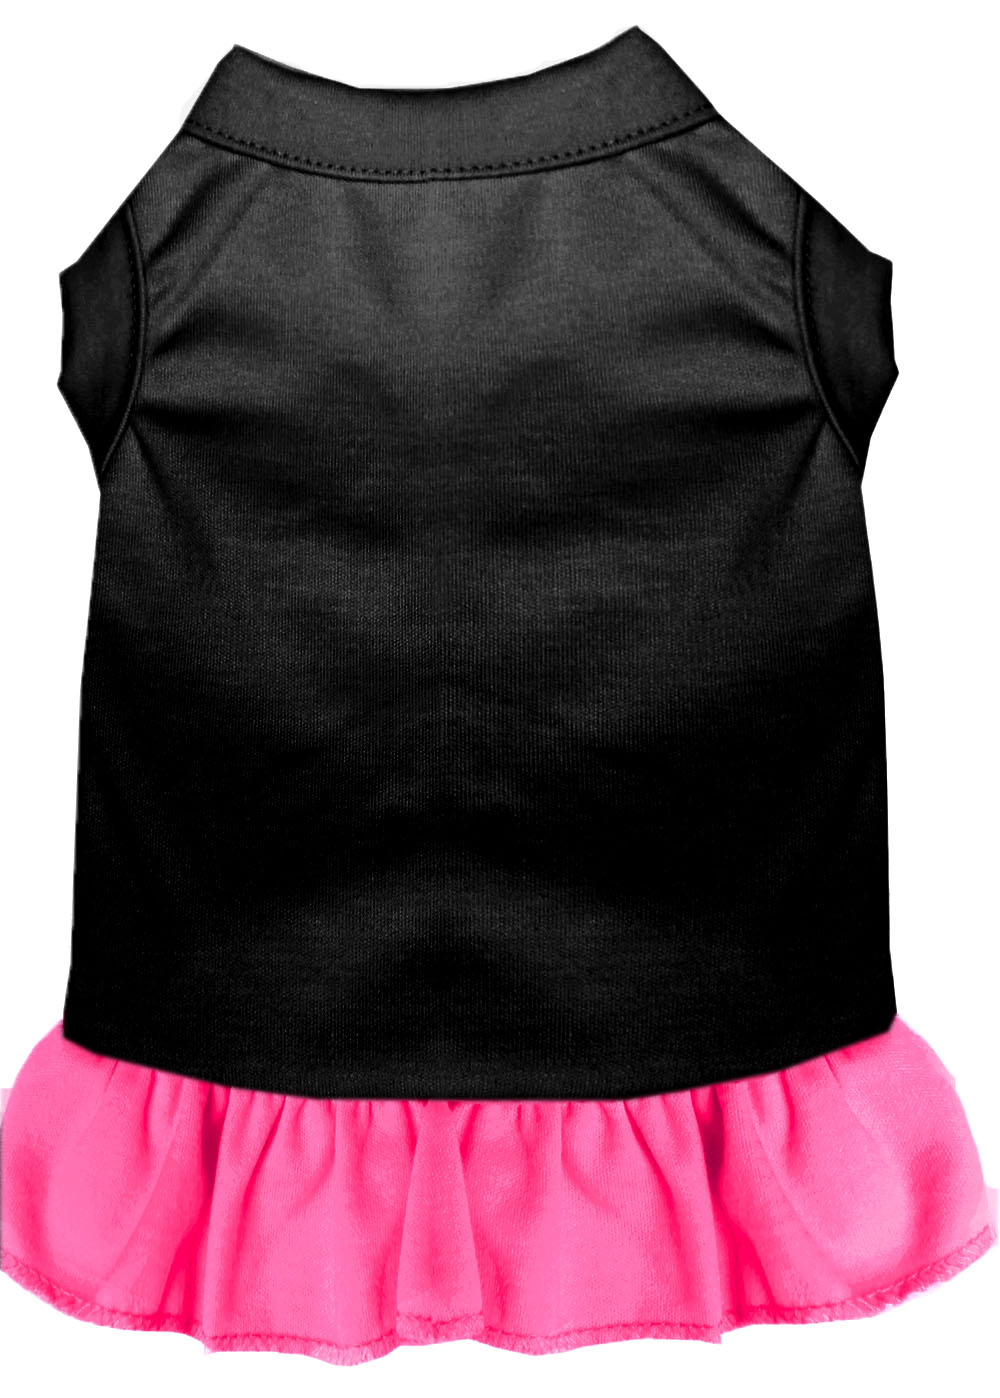 Plain Pet Dress Black with Bright Pink XXXL